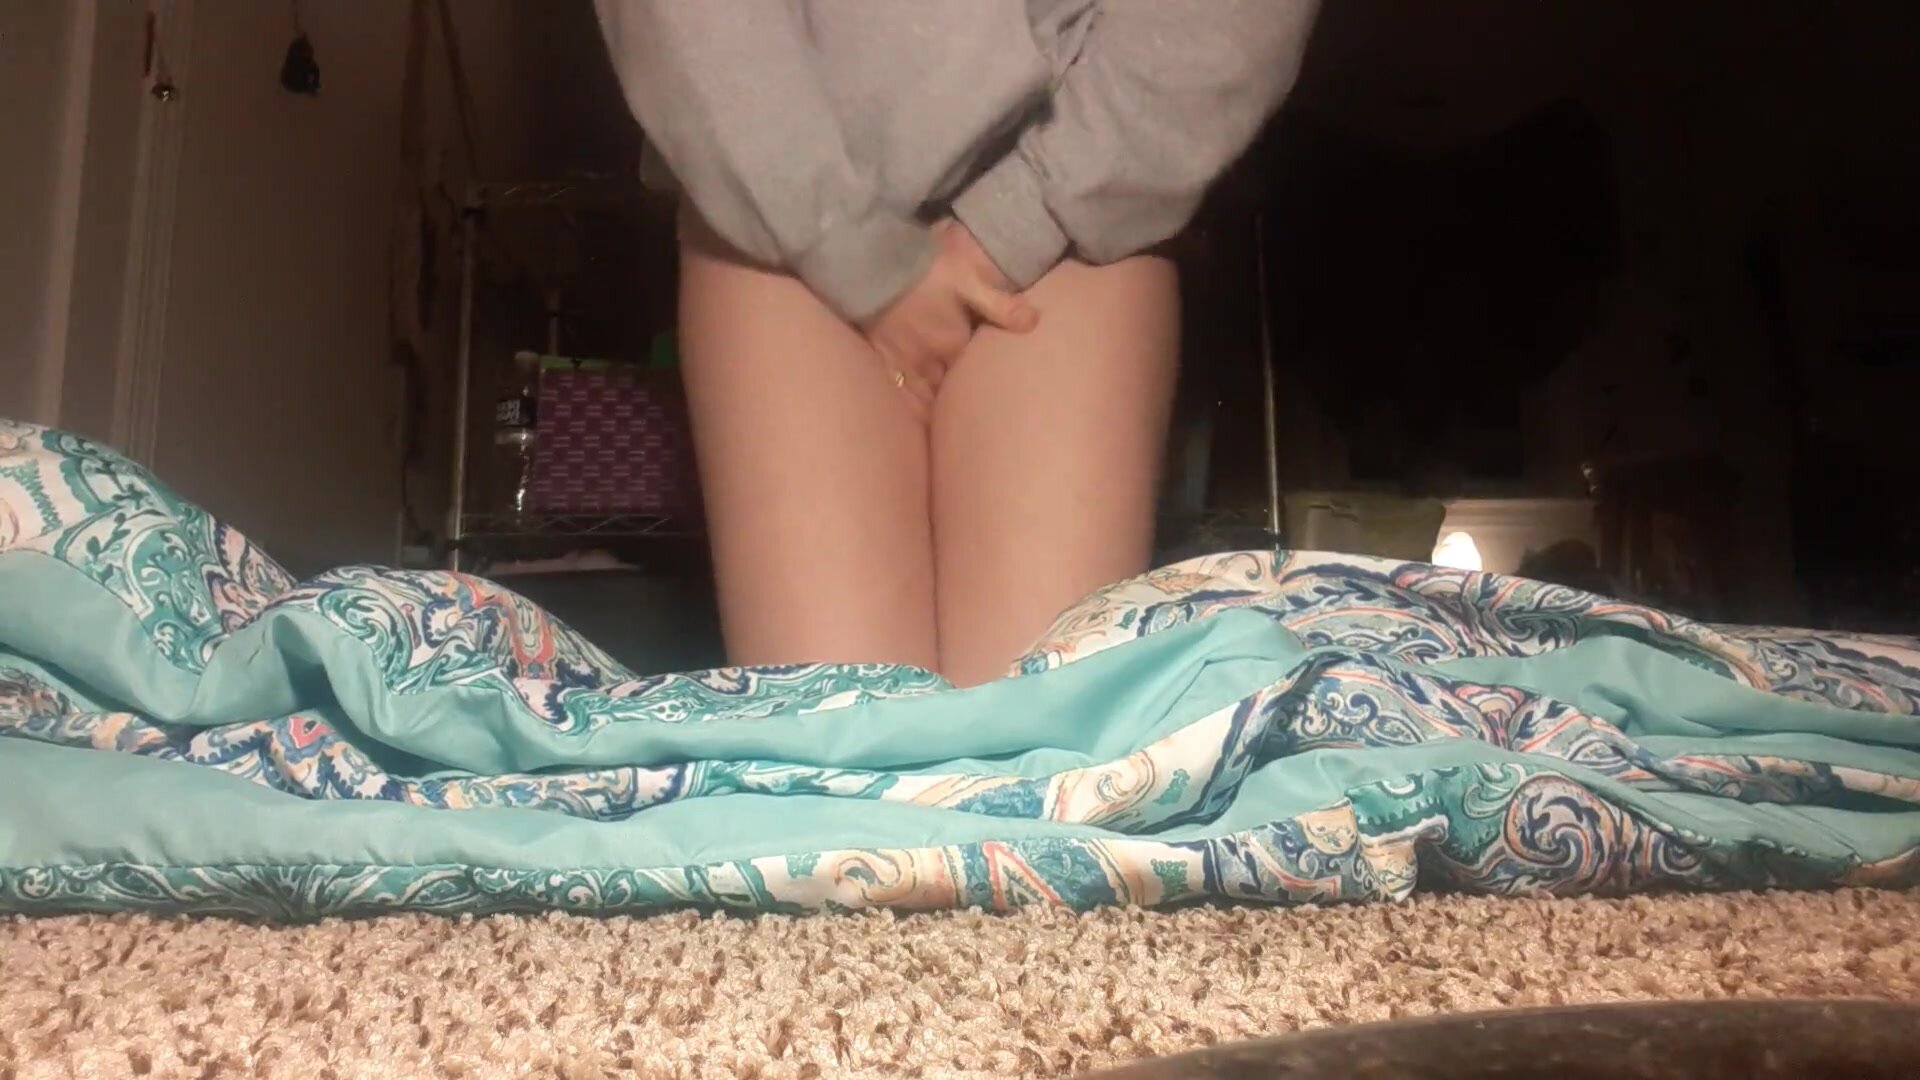 Naked wetting on her blanket